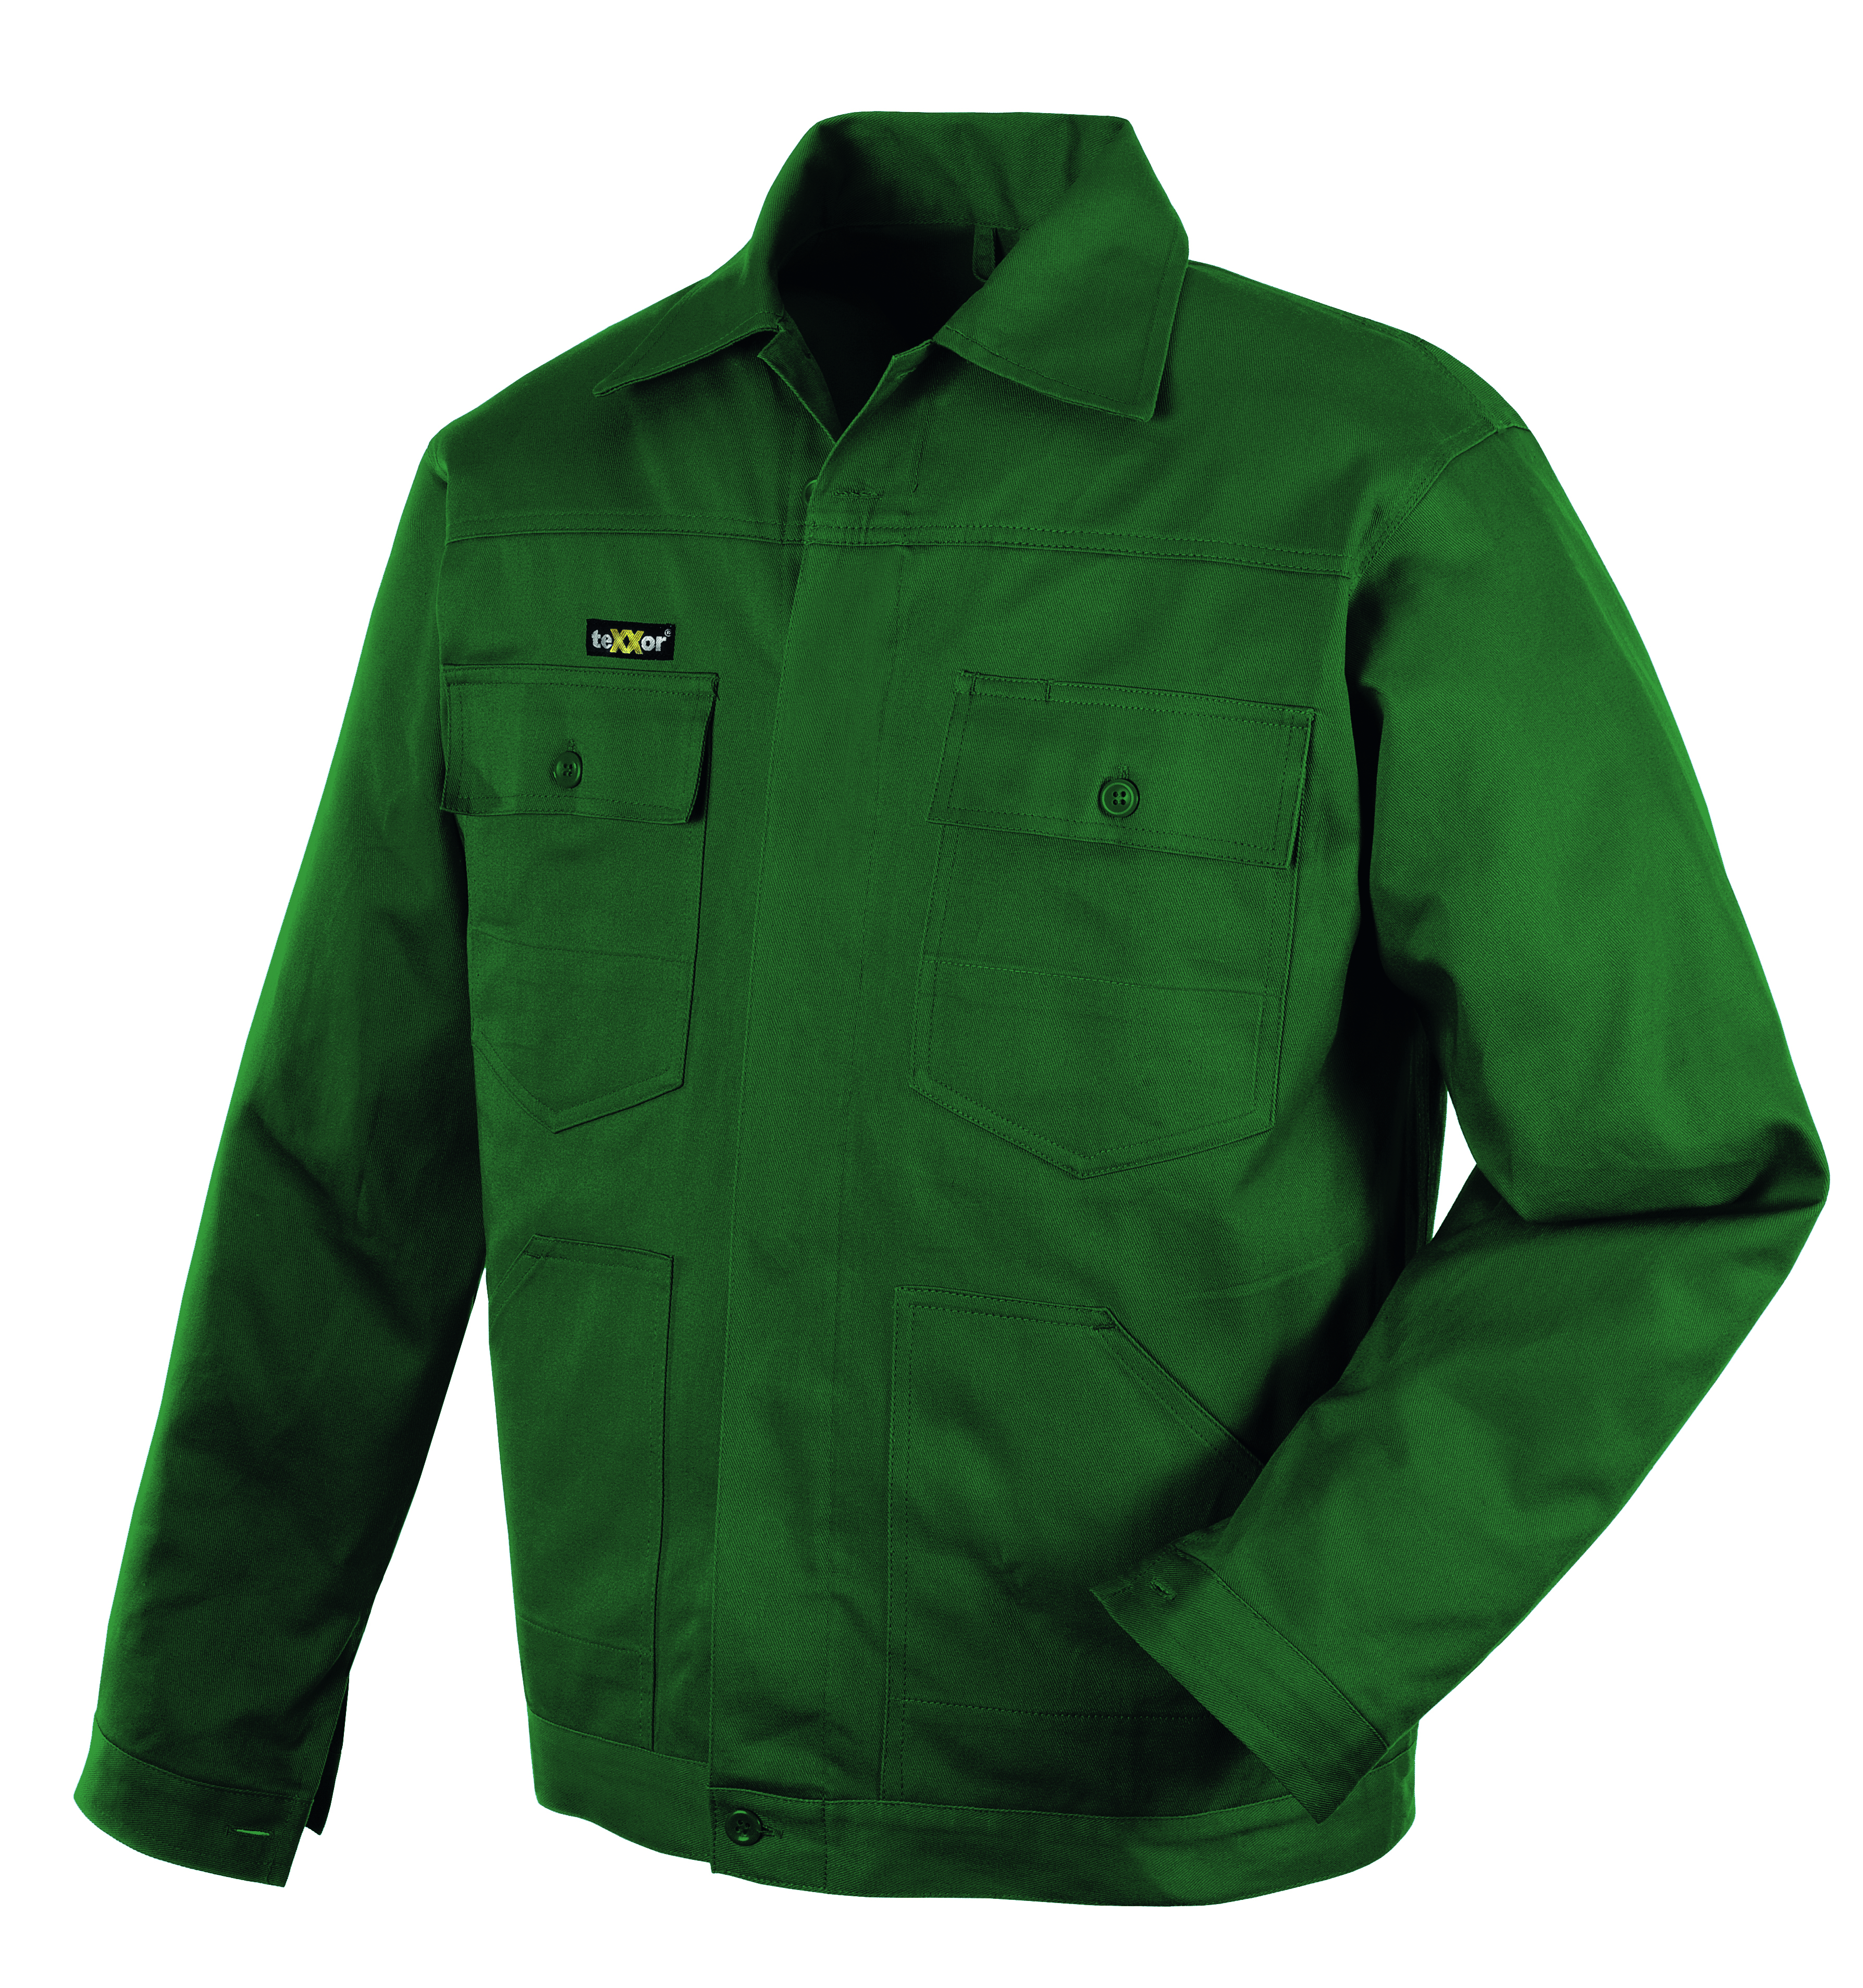 BIG-TEXXOR-Workwear, Arbeits-Berufs-Bund-Jacke, 290g/m², grün